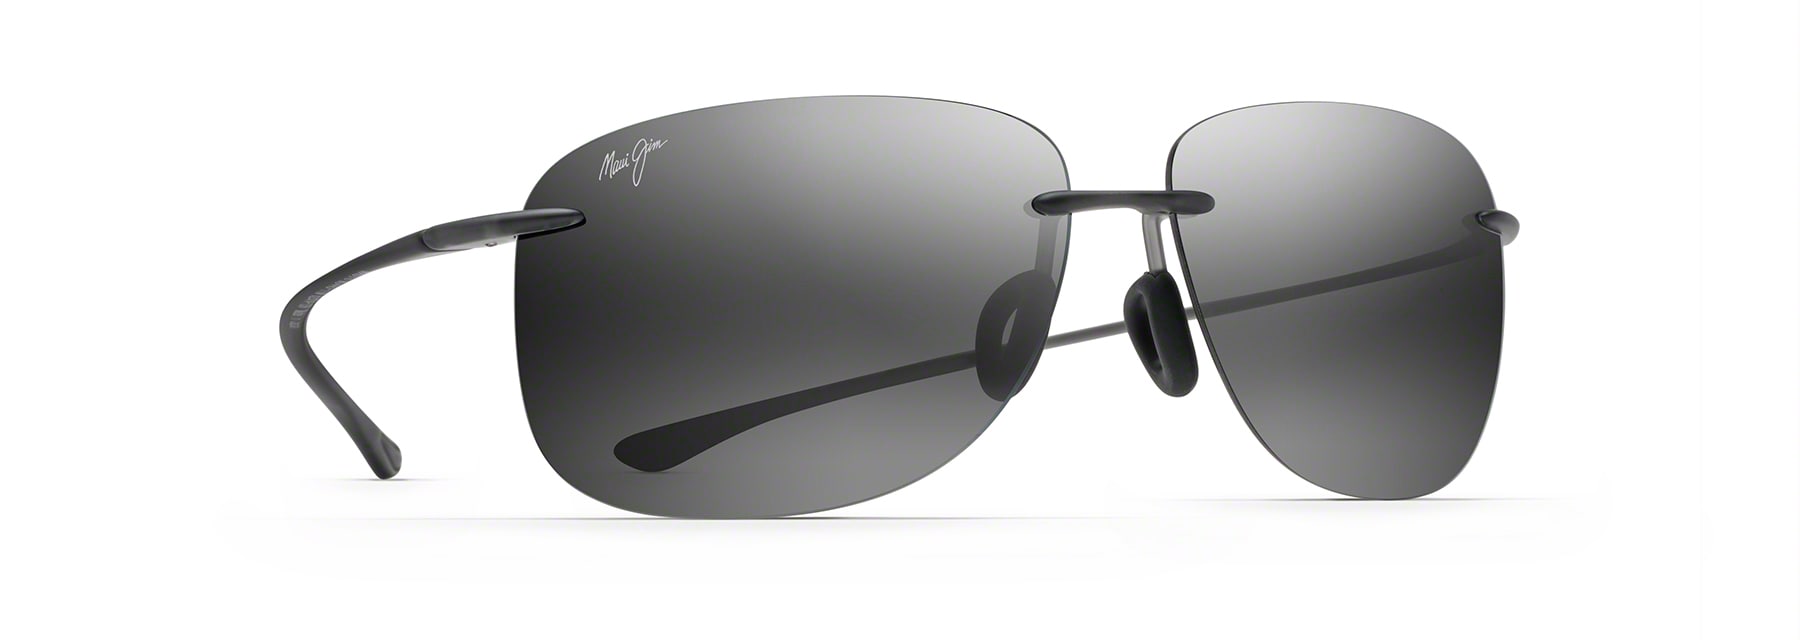 New Authentic Polarized Rimles MAUI JIM HIKINA Sunglasses H445-26M Bronze Lenses